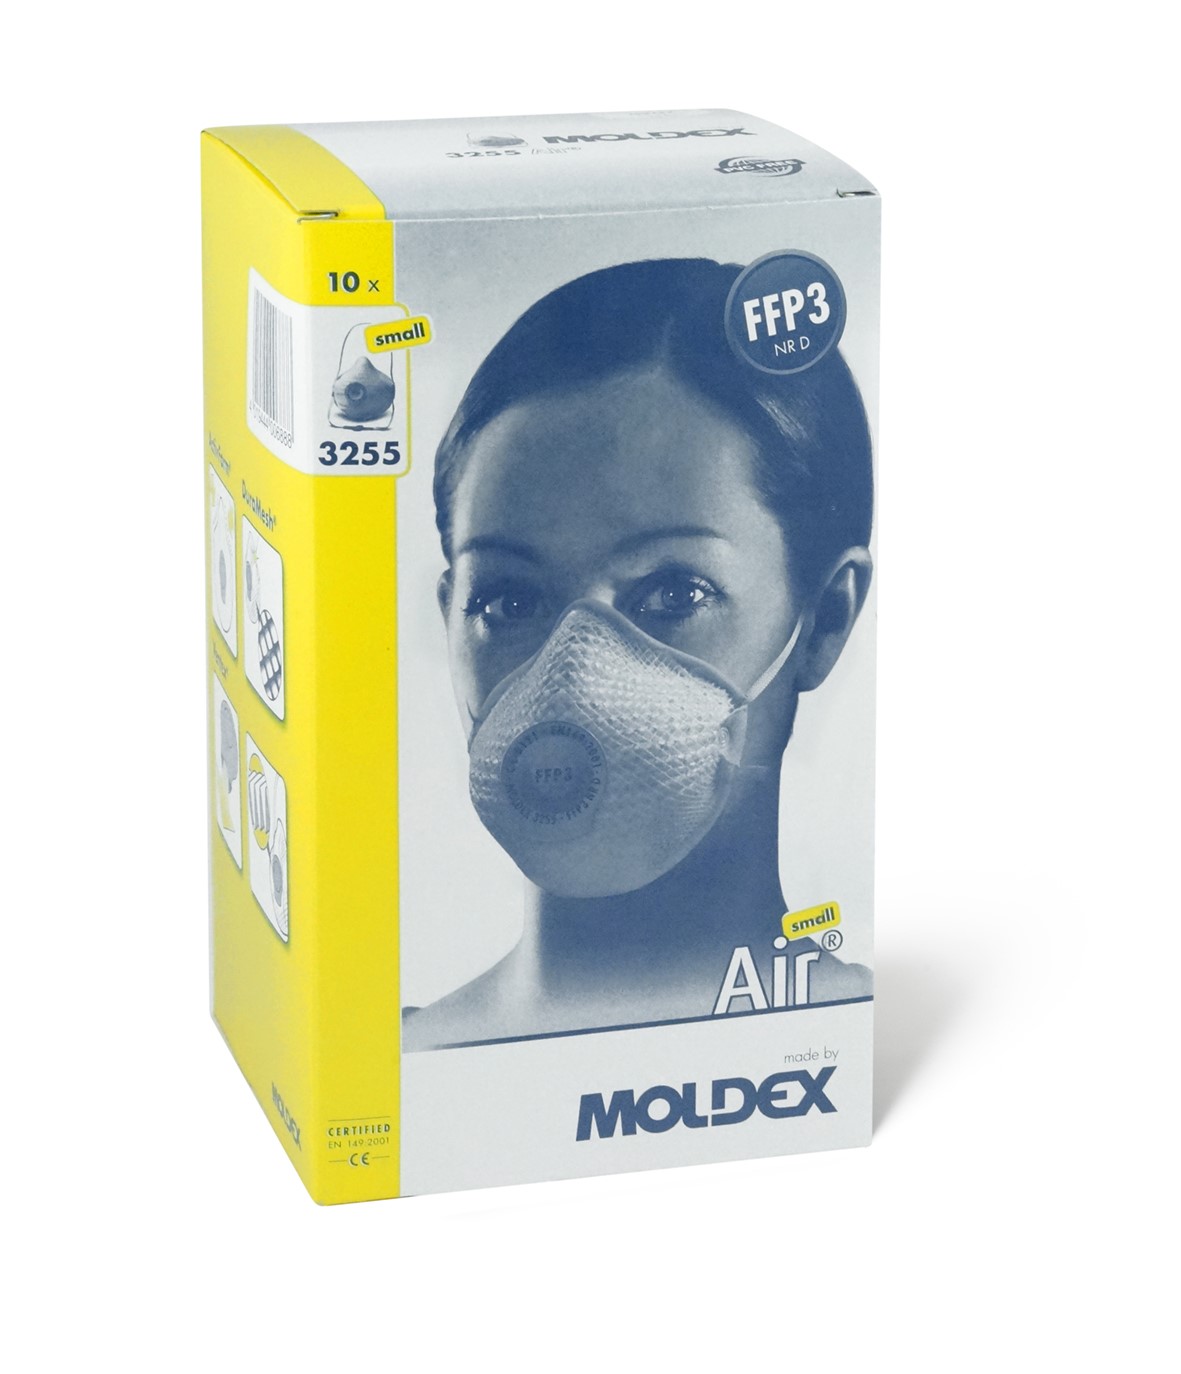 Moldex 3255 FFP3 Valved Face Masks Small - Pack of 10